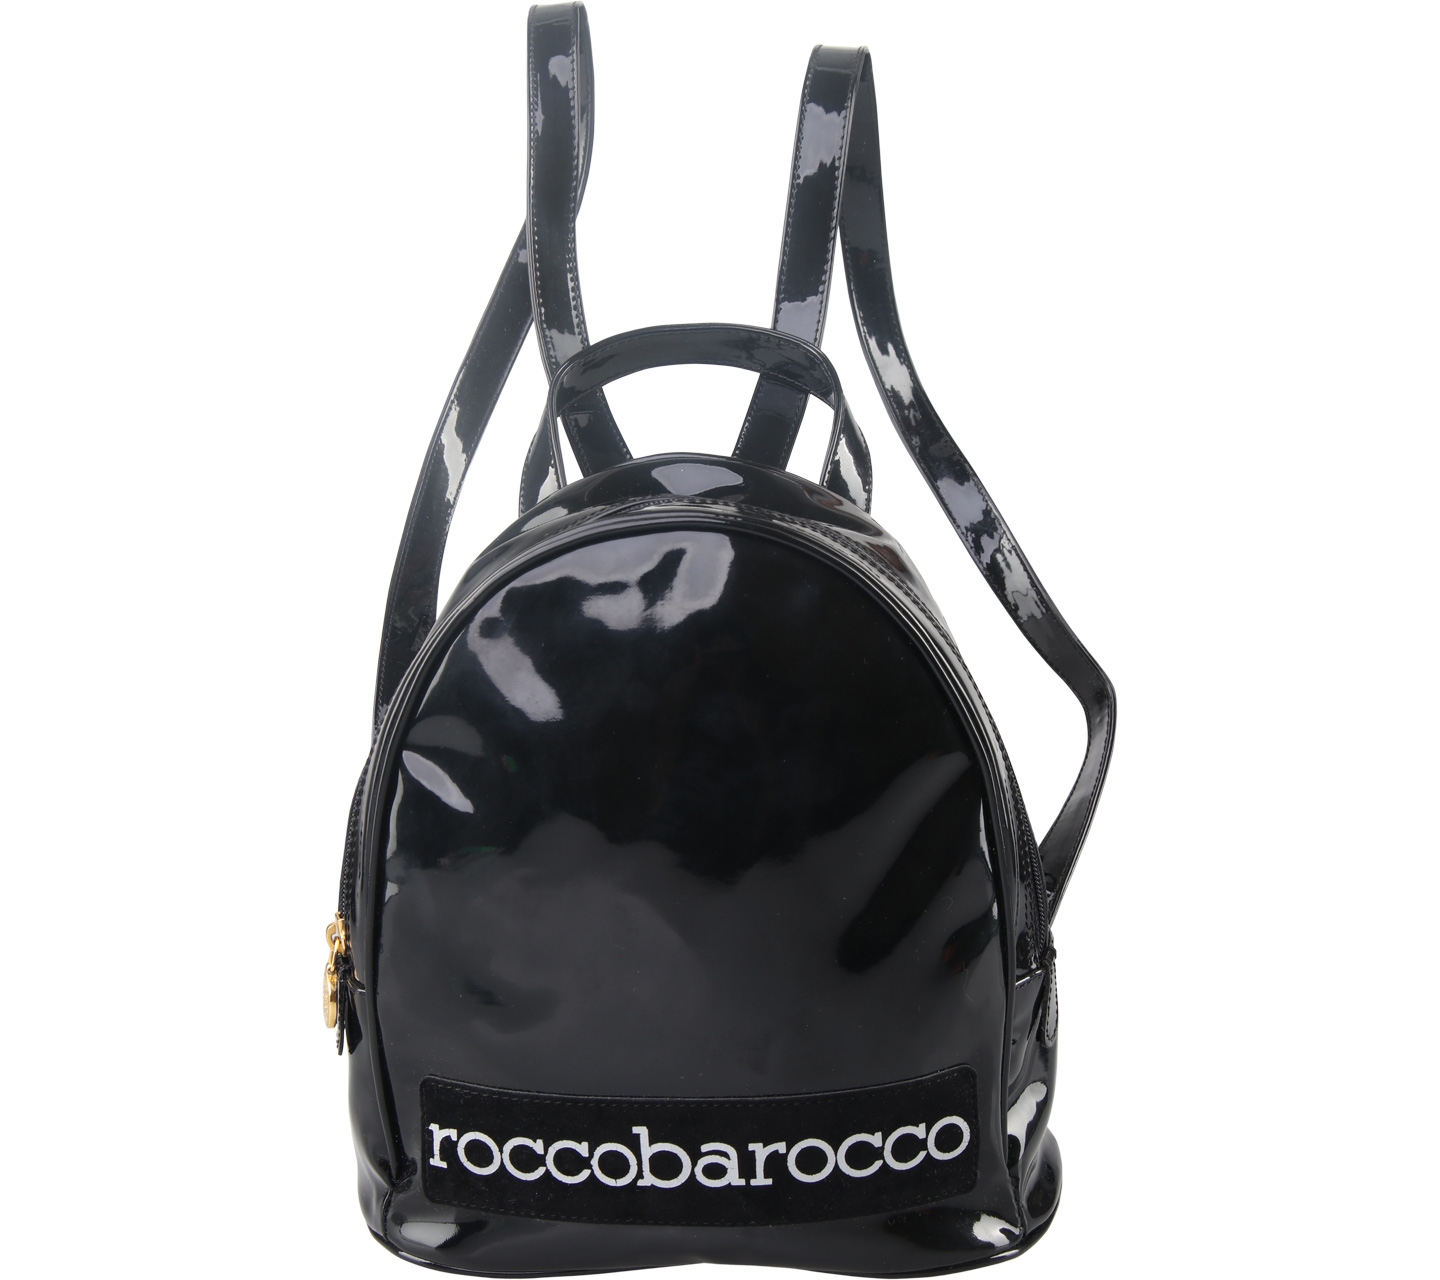 Rocco Barocco Black Backpack